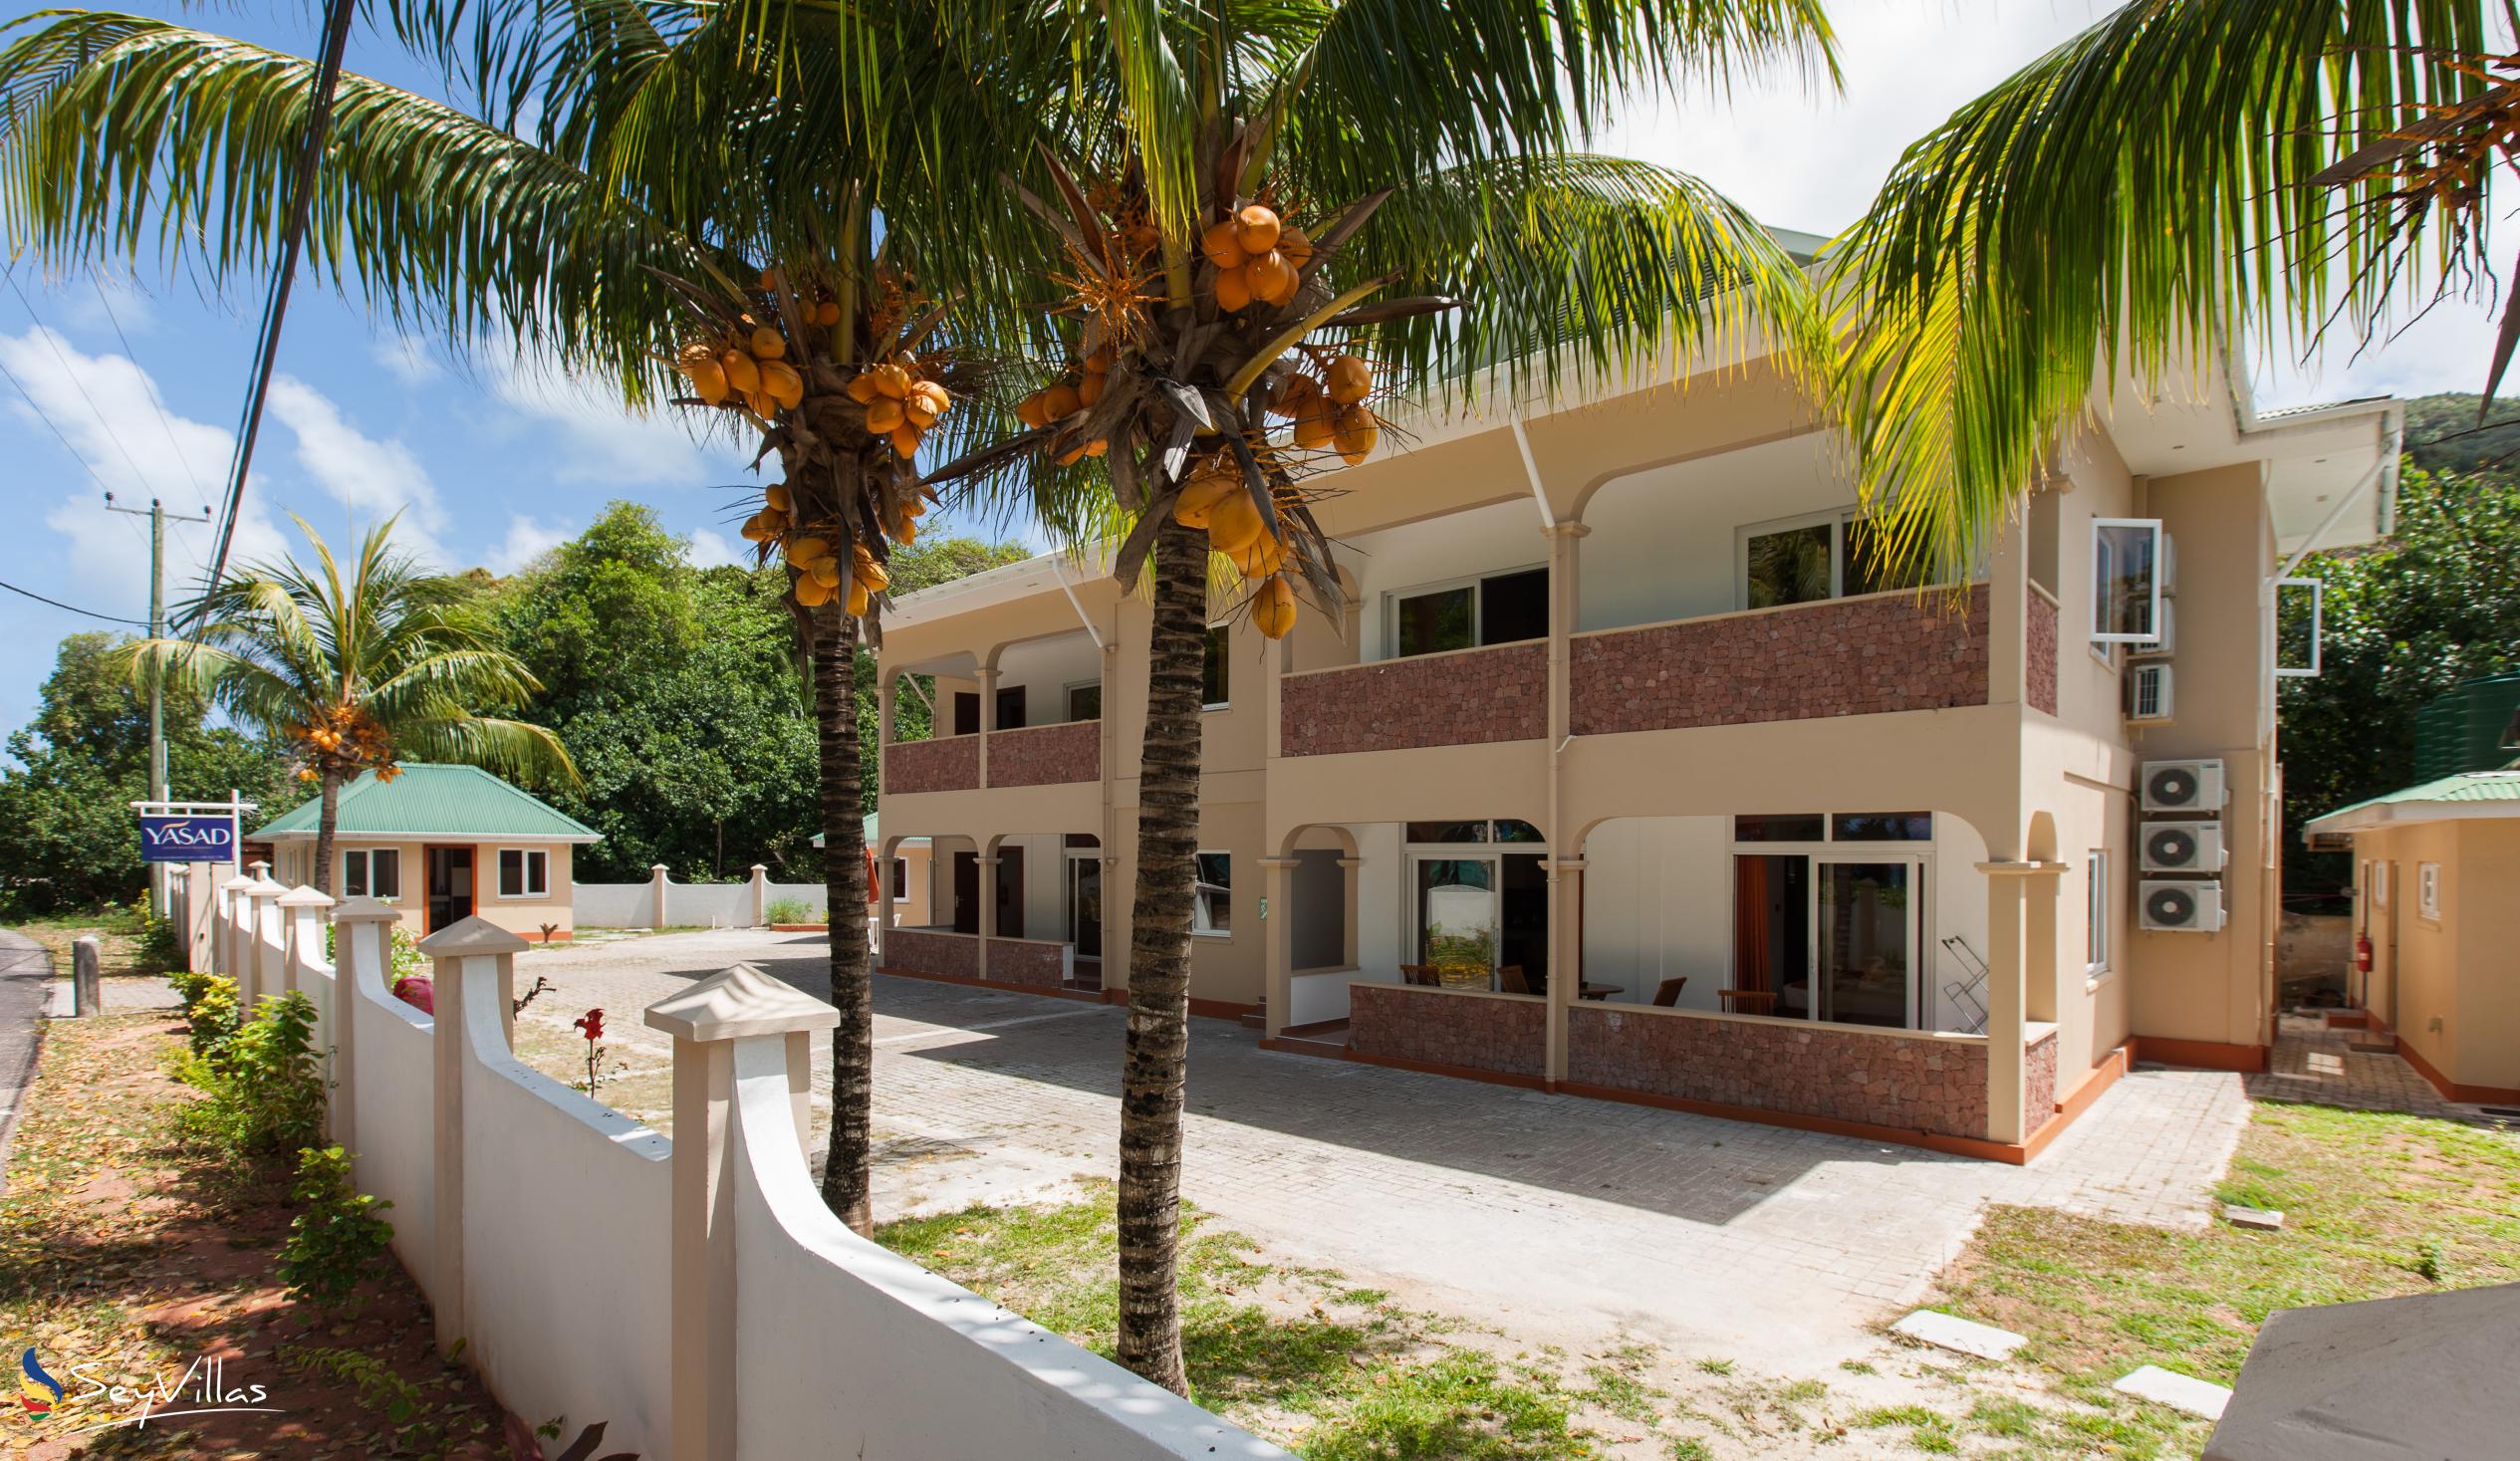 Photo 47: YASAD Luxury Beach Residence - 2-Bedroom Apartment - Praslin (Seychelles)